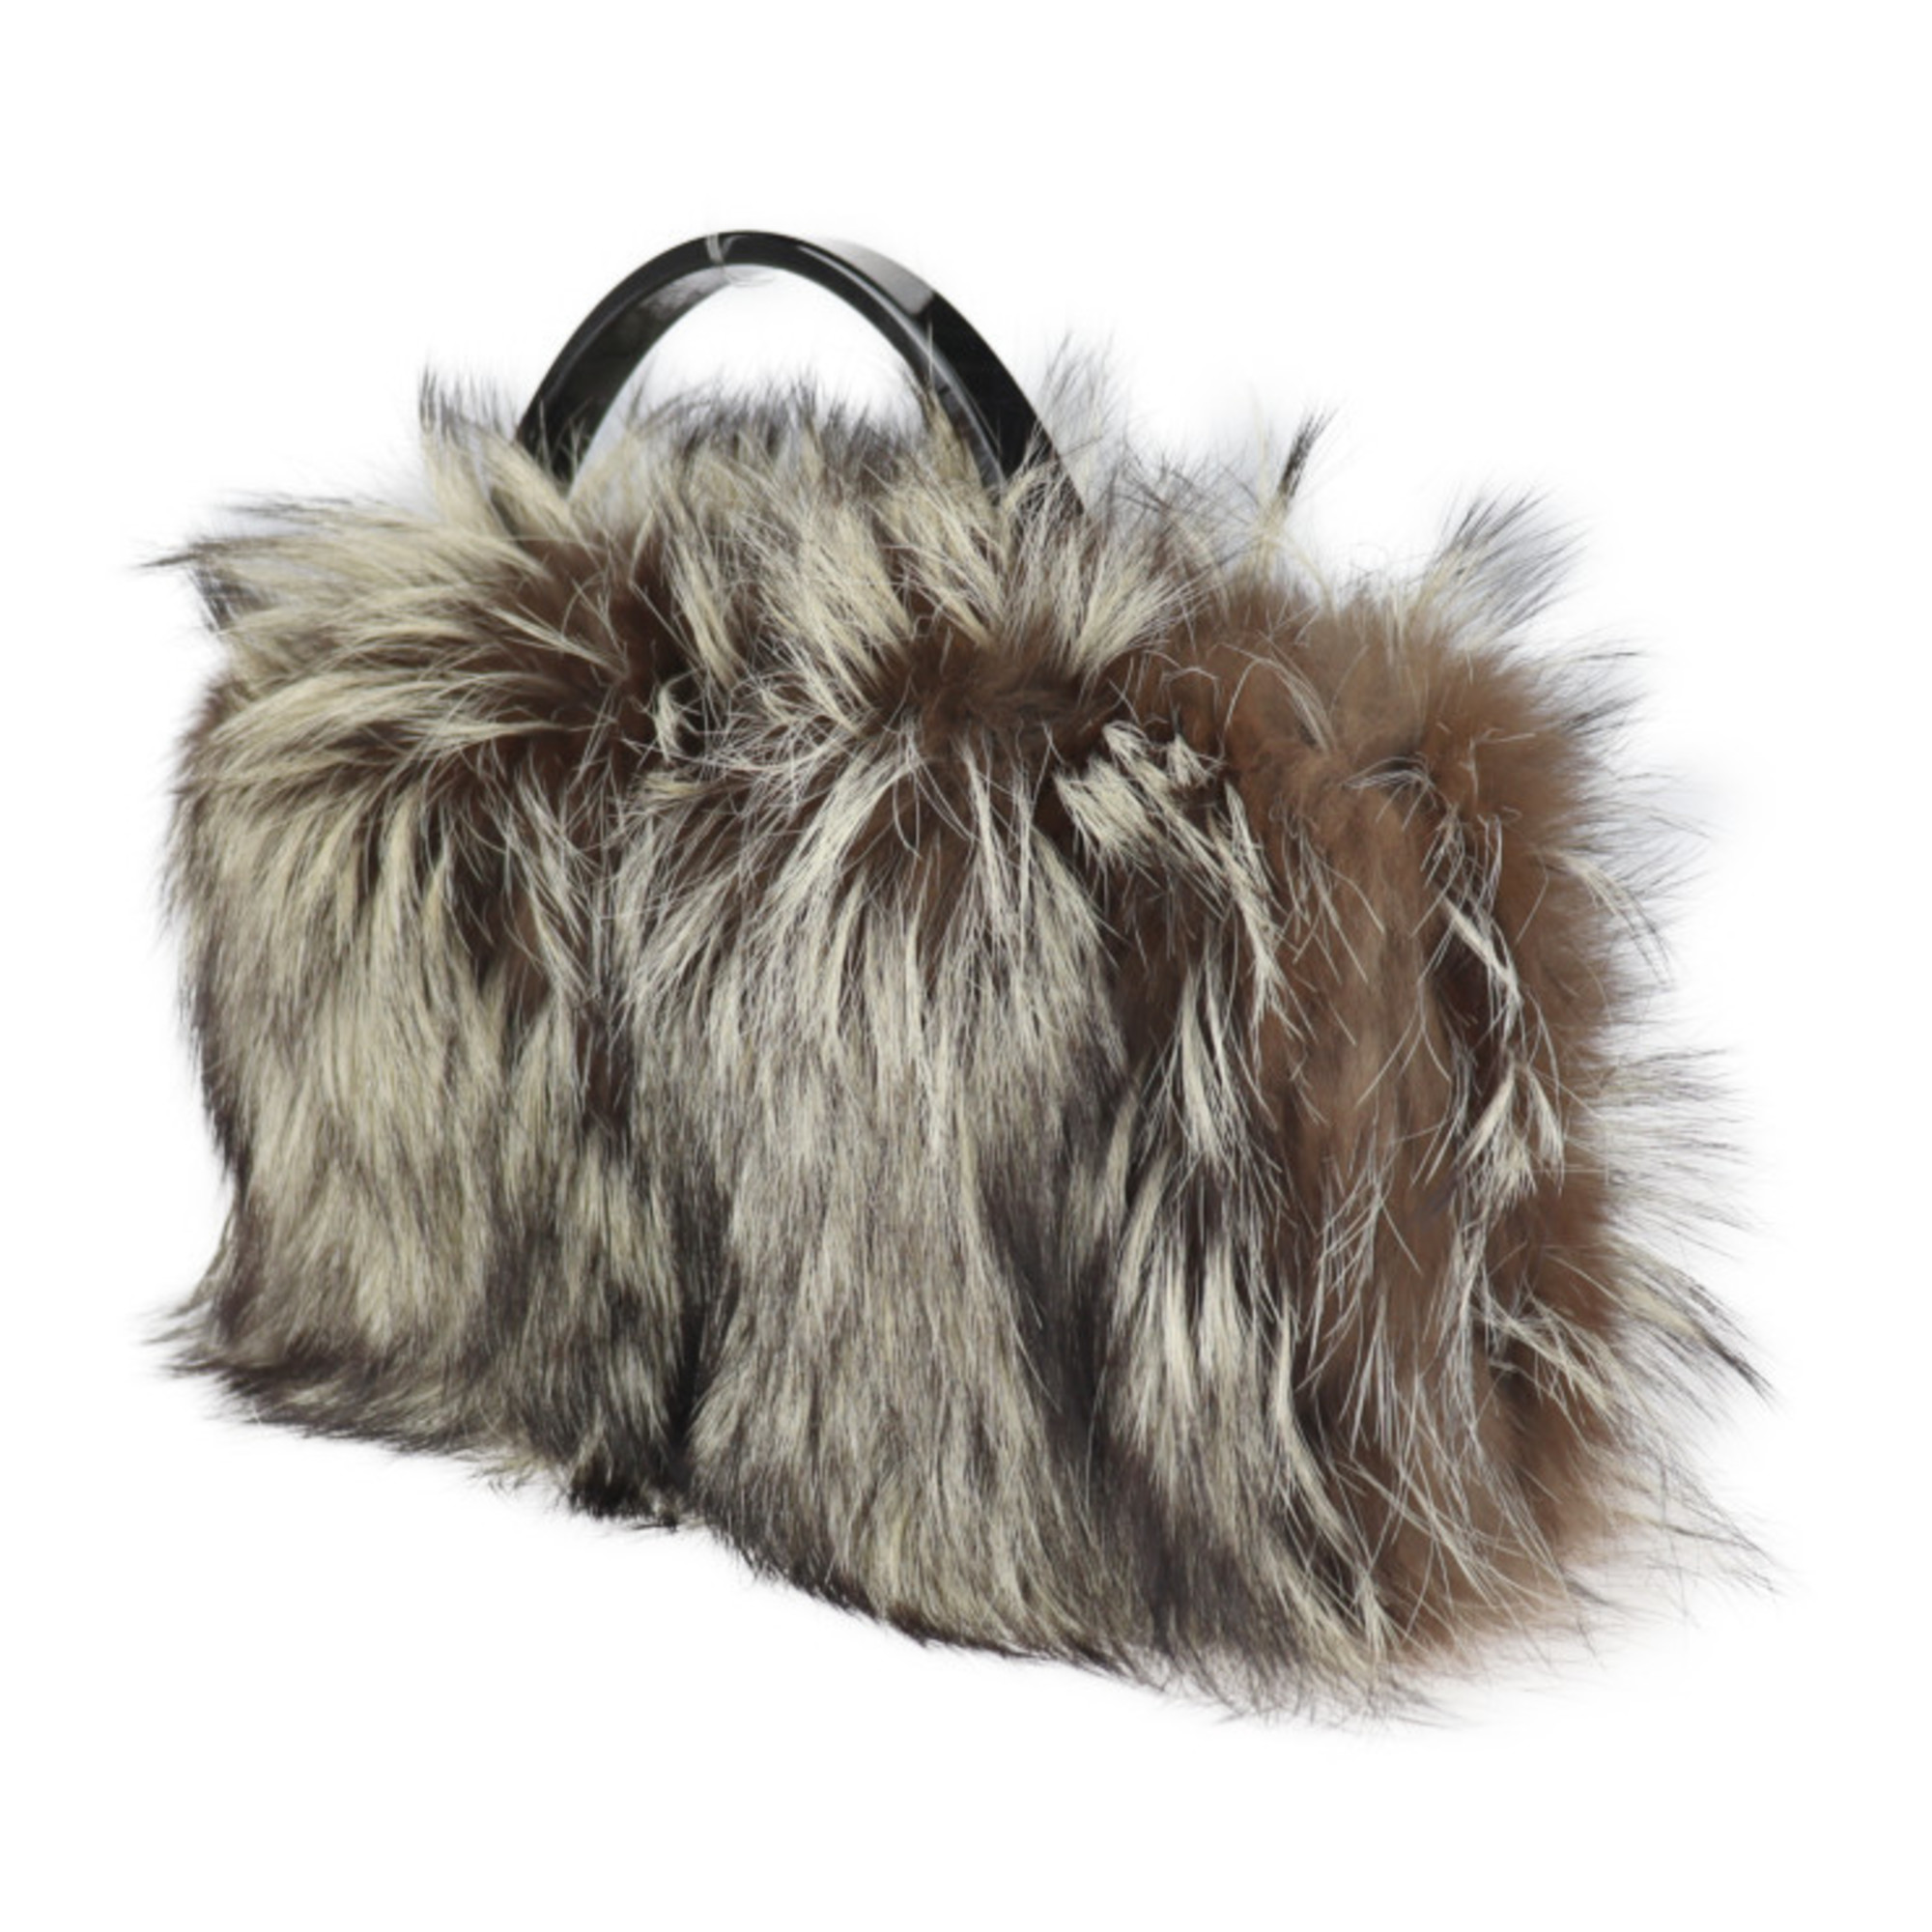 GIVENCHY Givenchy Handbag Plastic Fur Brown Black Mini Bag Compact Party